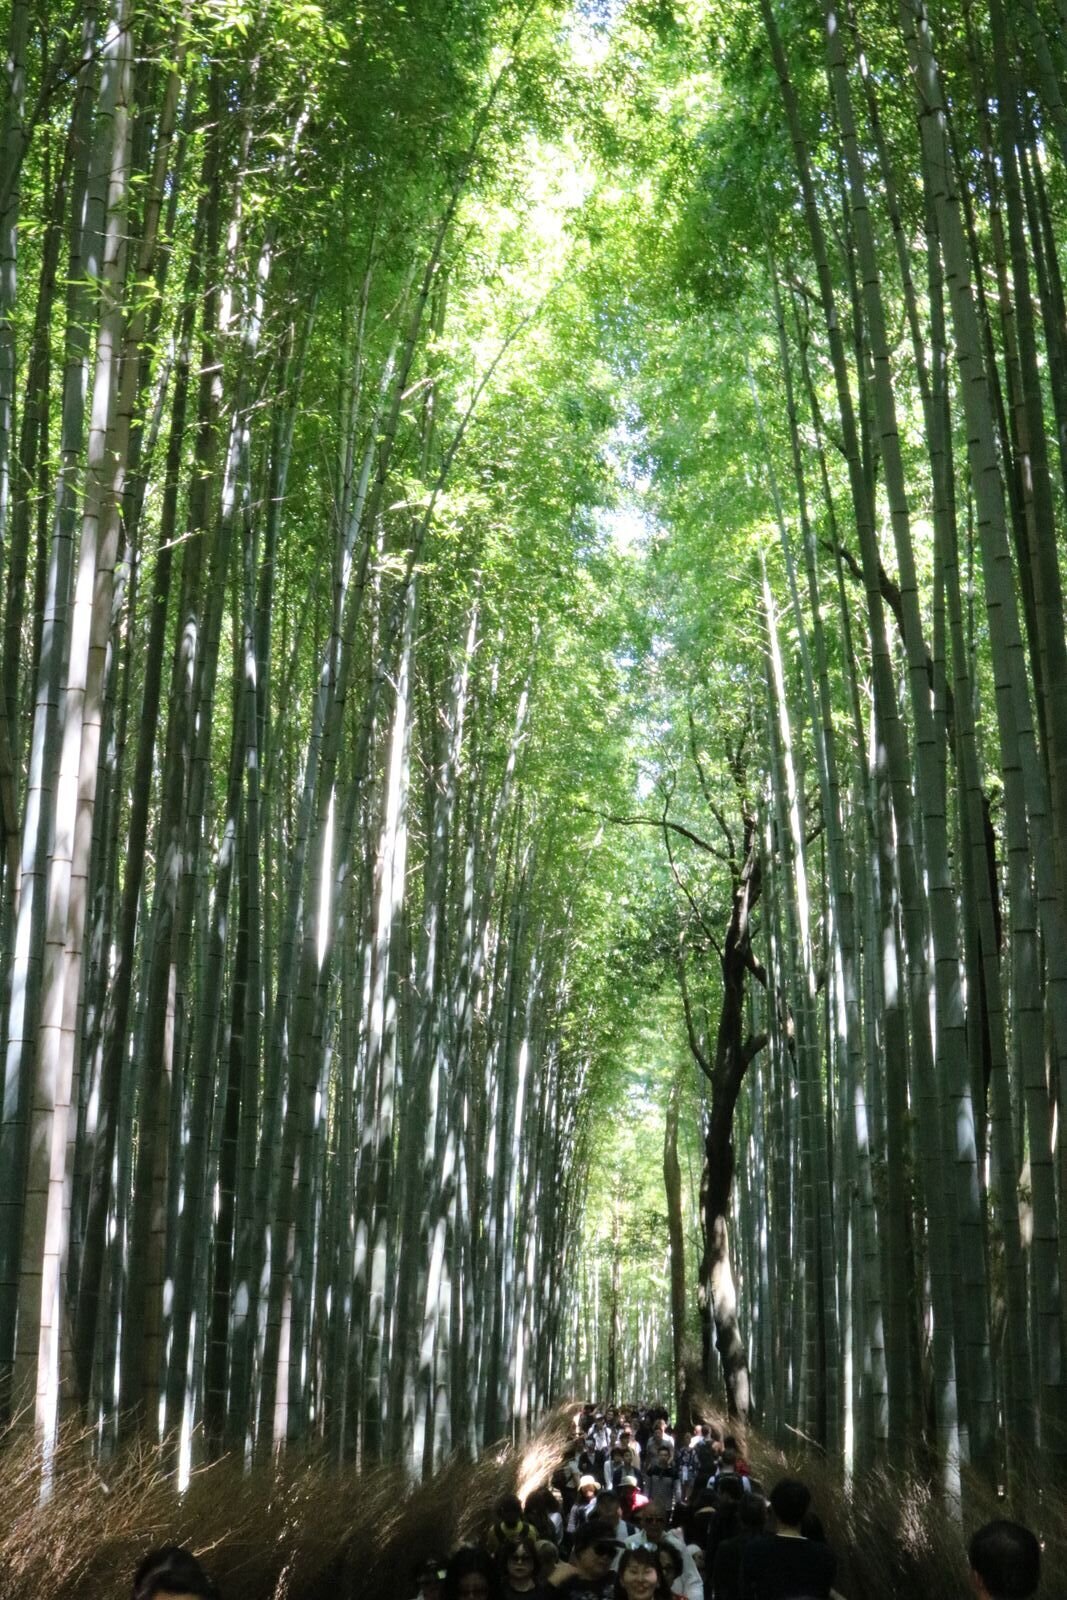 The bamboo grove